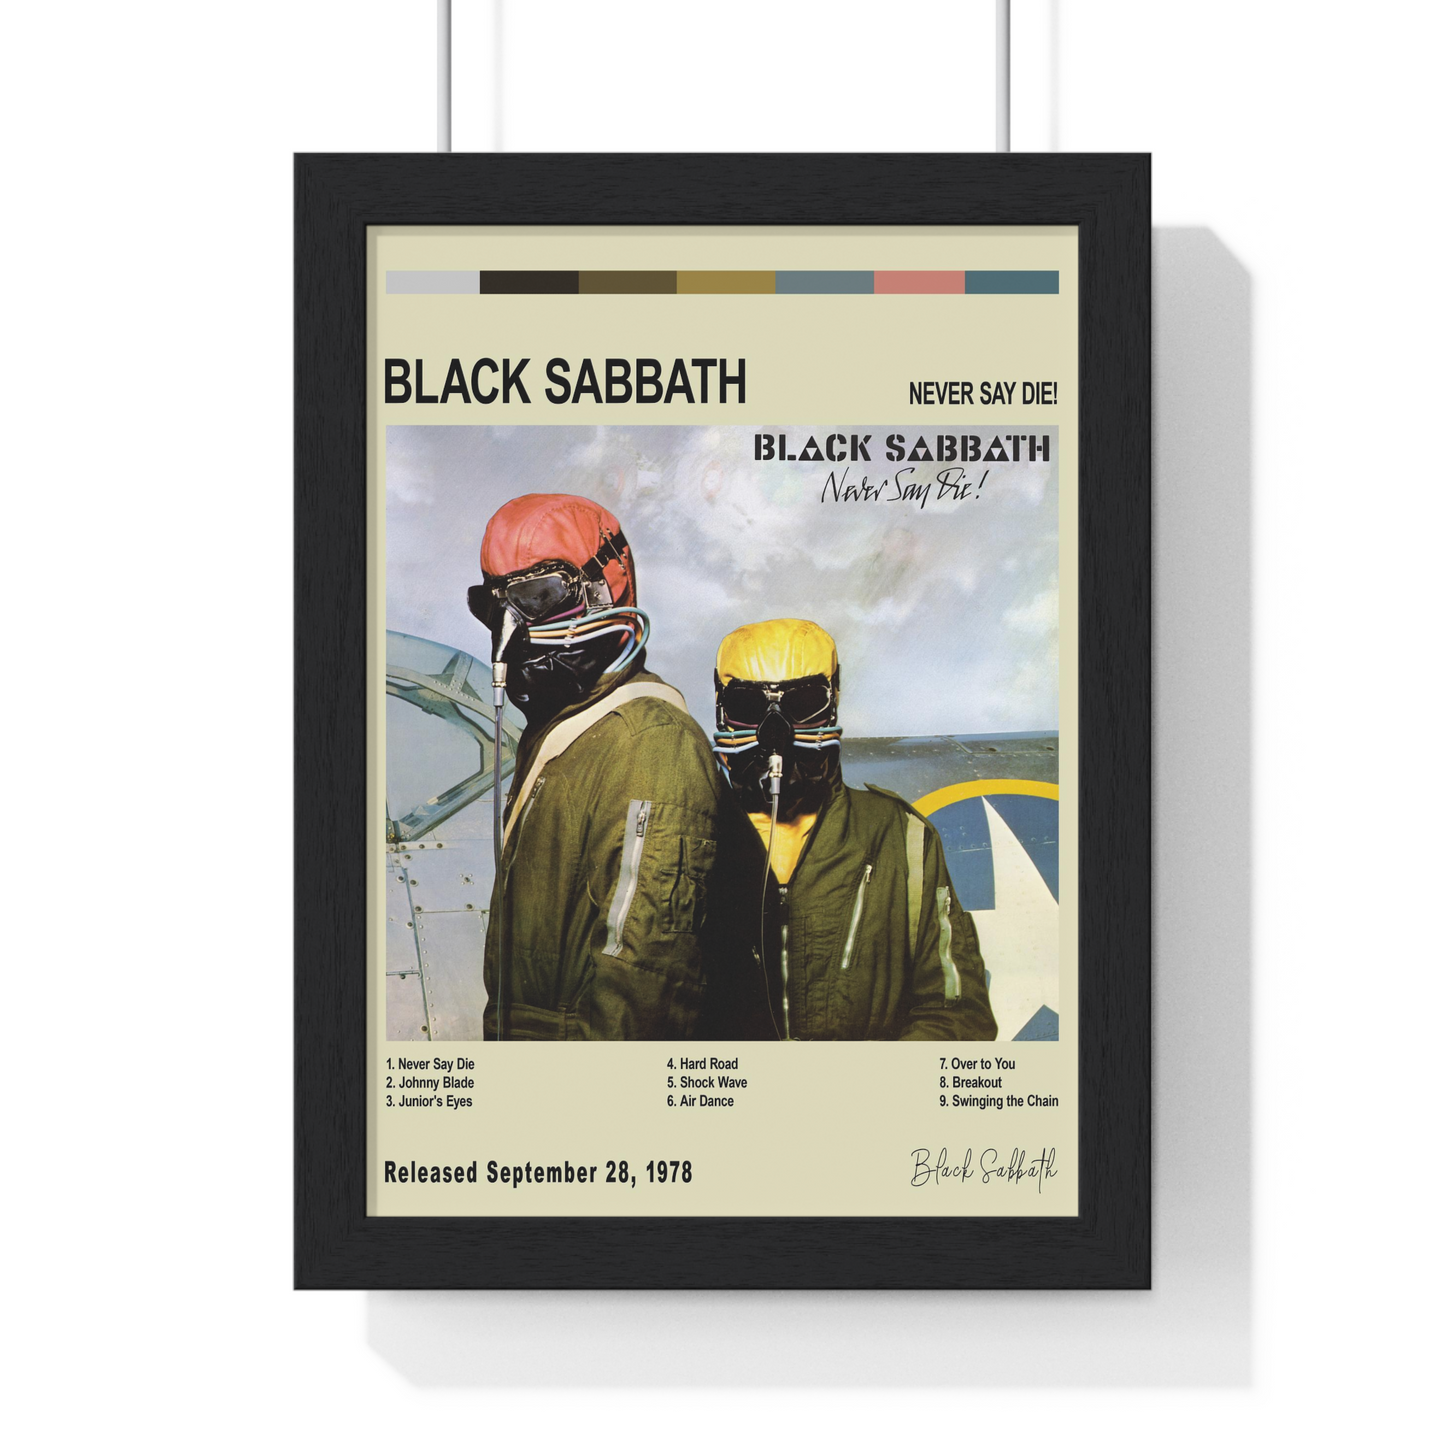 Black Sabbath Album Cover Poster